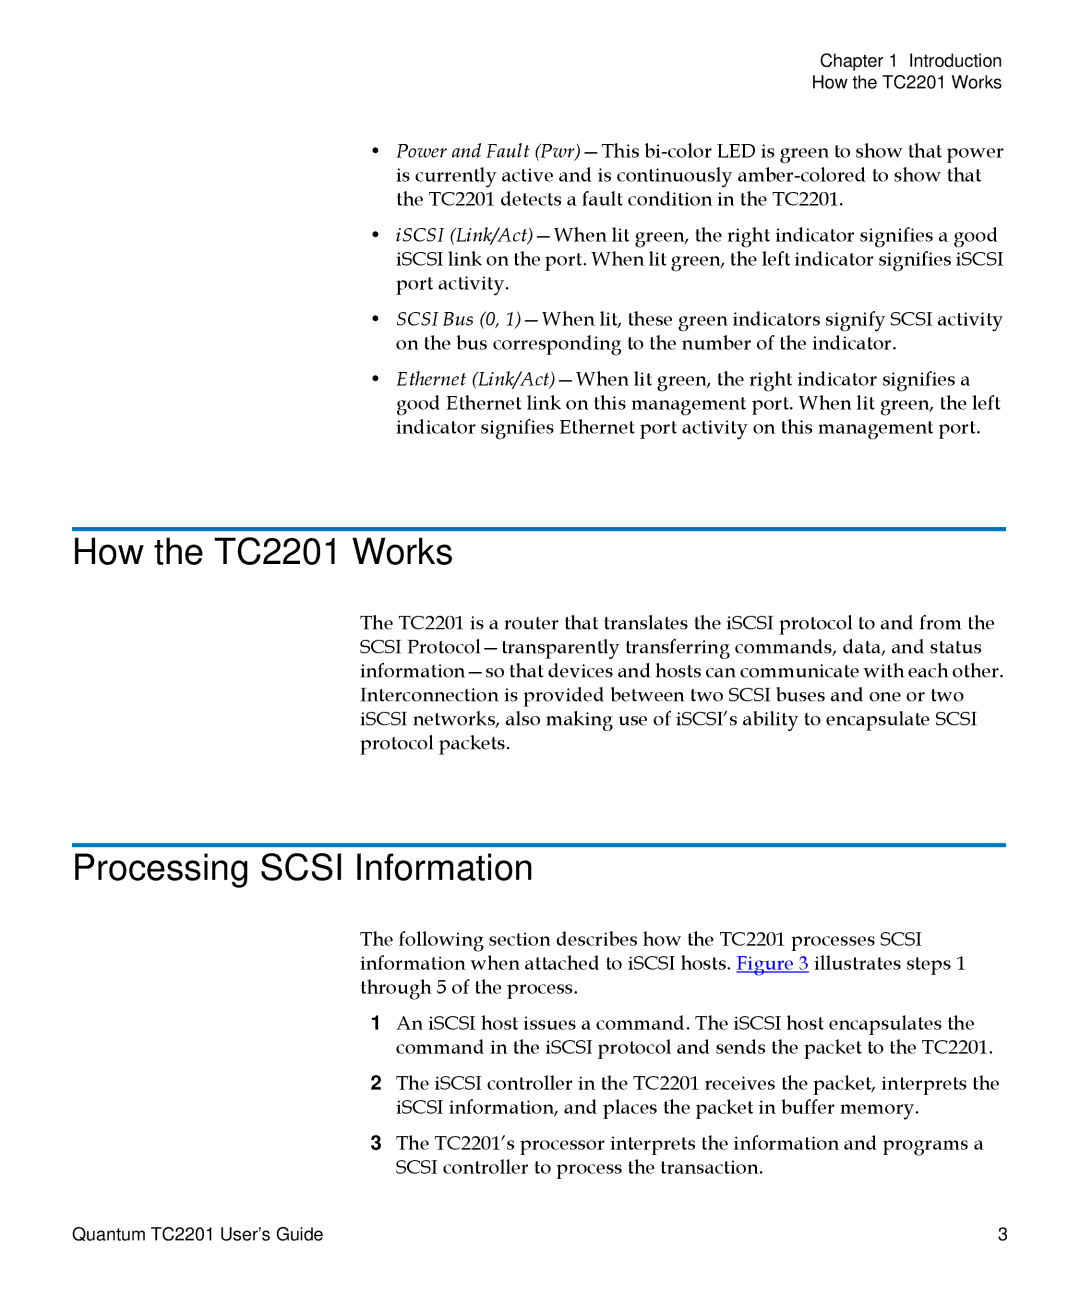 Quantum manual How the TC2201 Works, Processing Scsi Information 